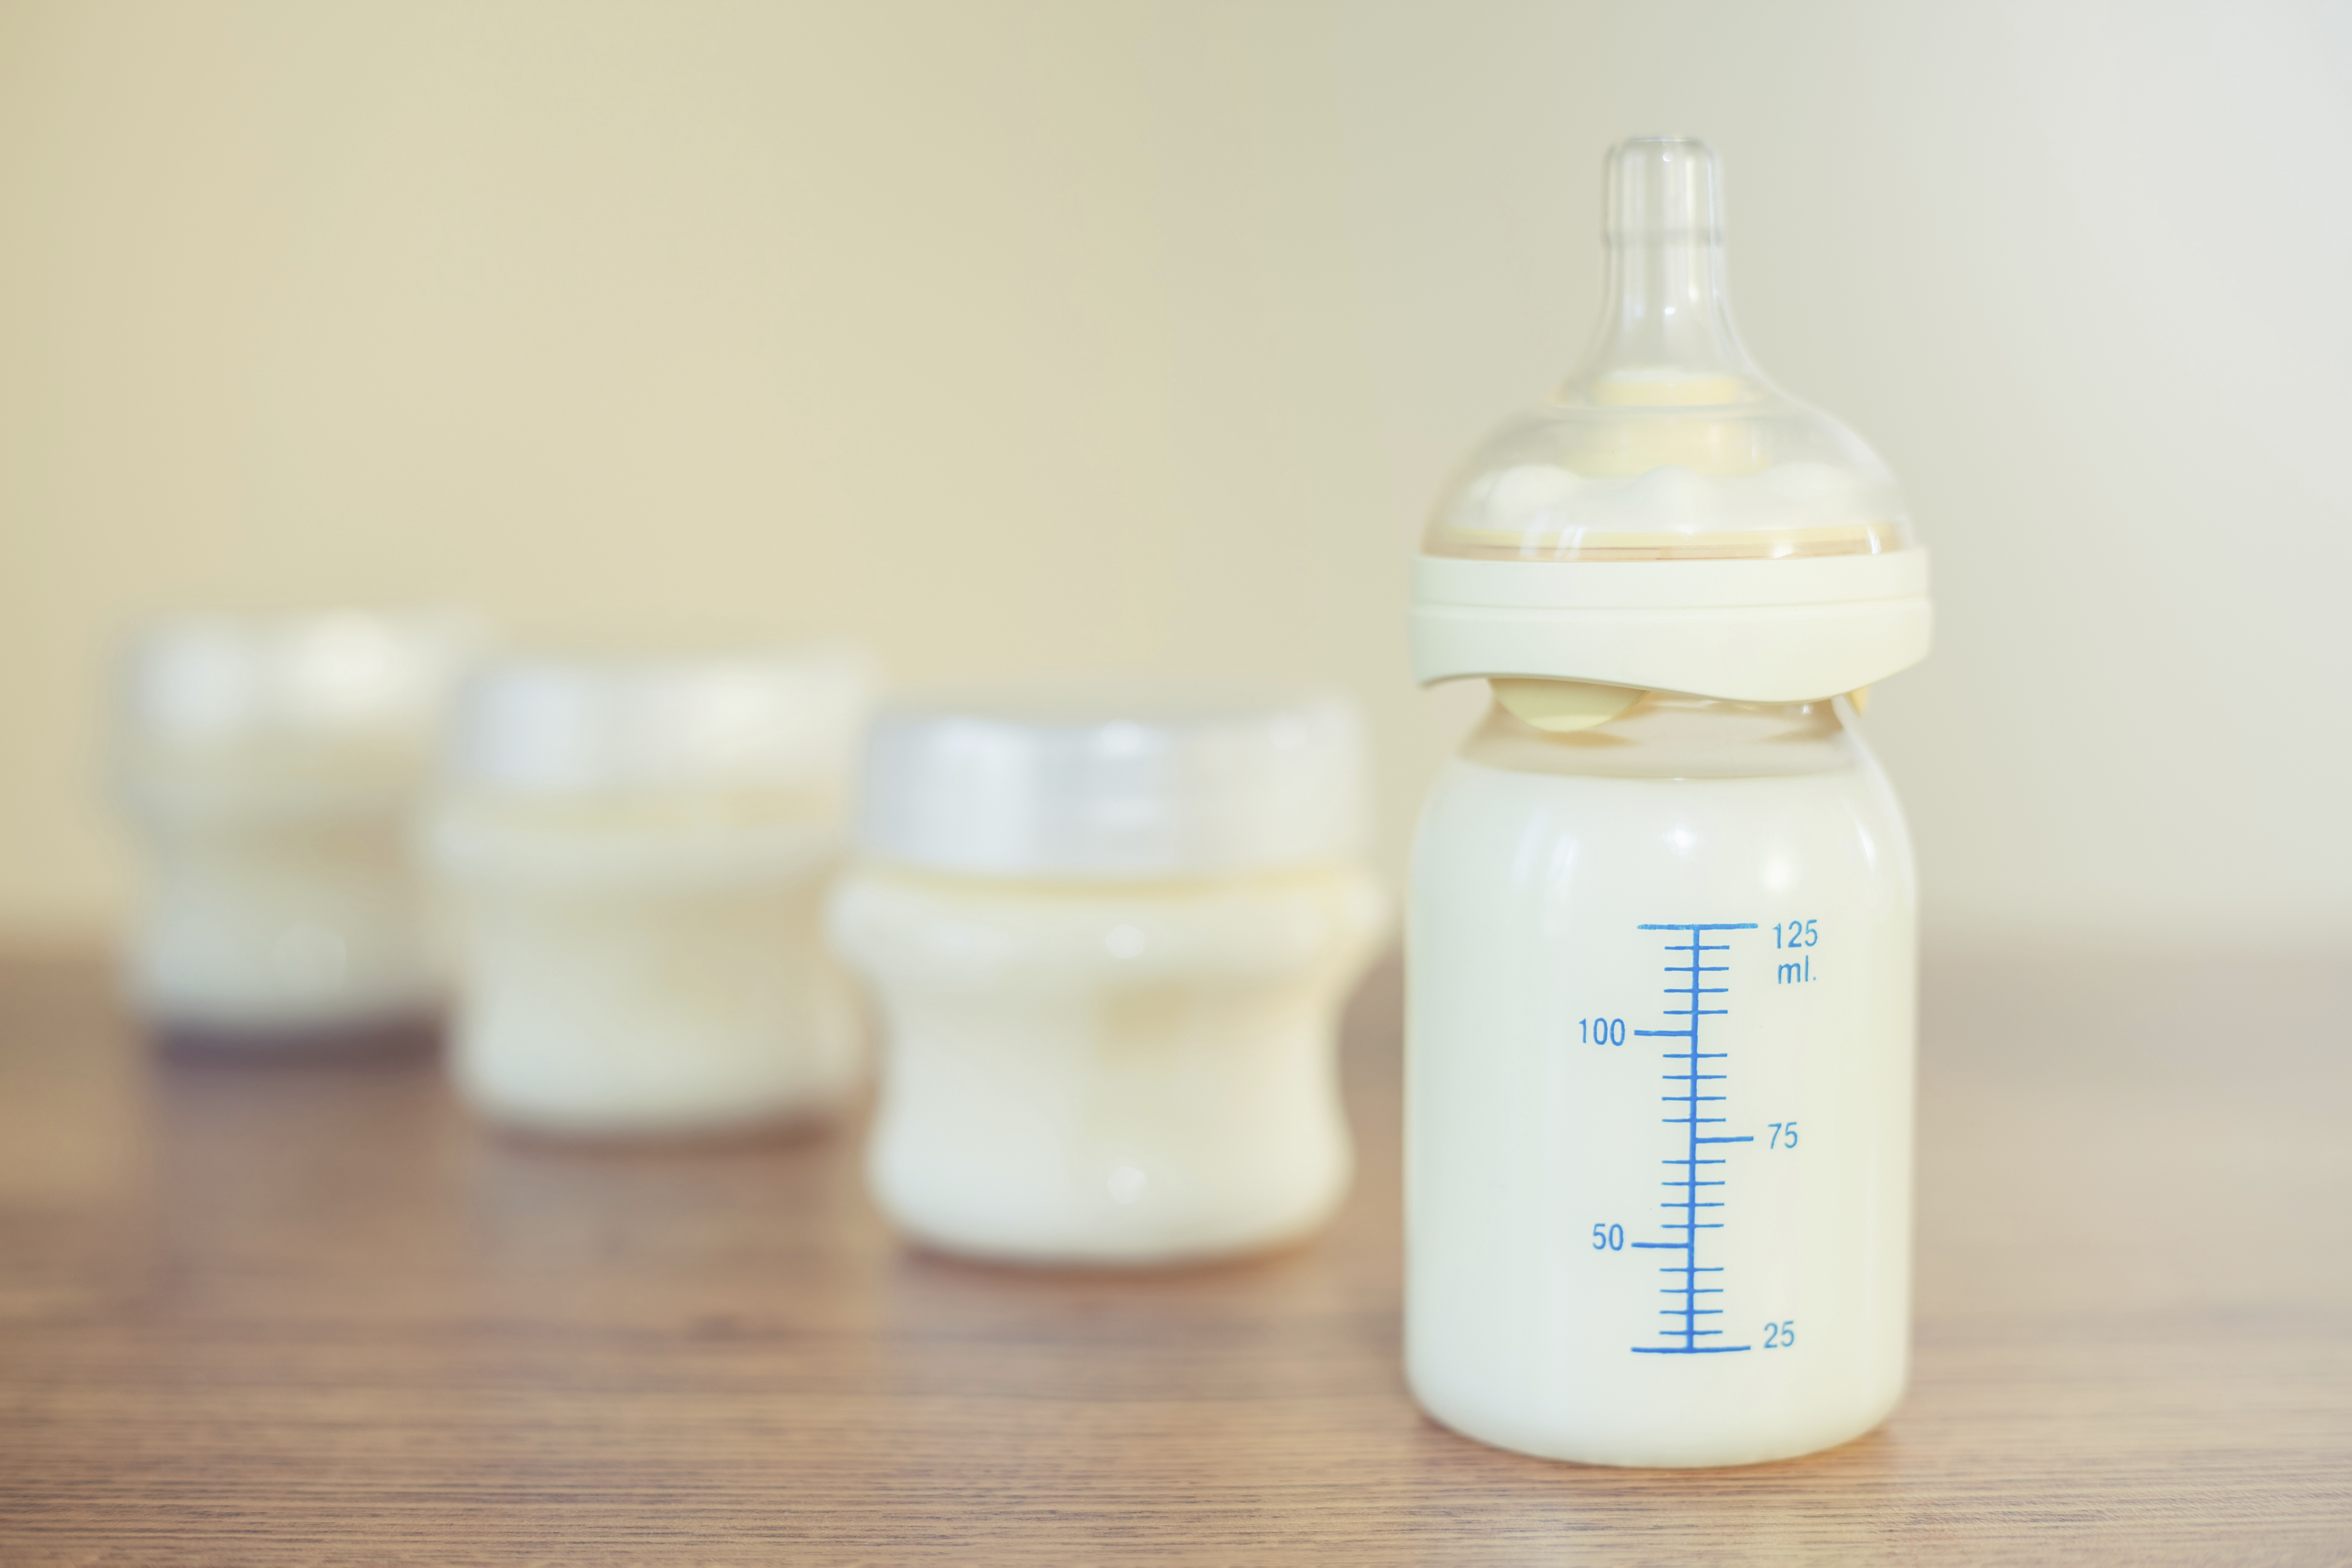 Adult health craze for human breast milk poses risks - CBS News